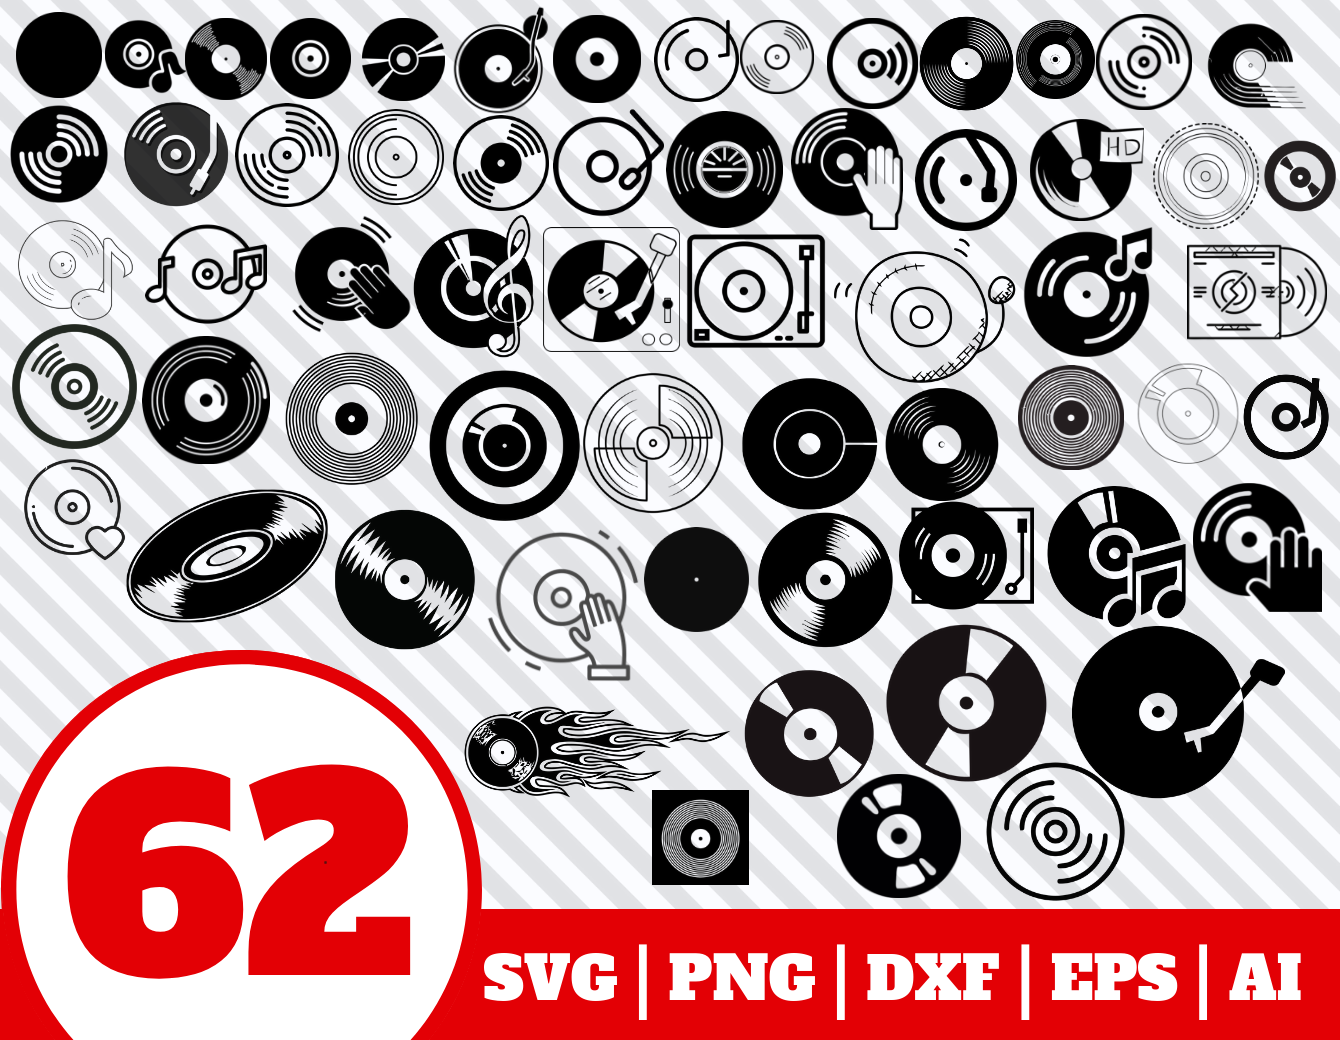 62 Vinyl Record SVG BUNDLE.